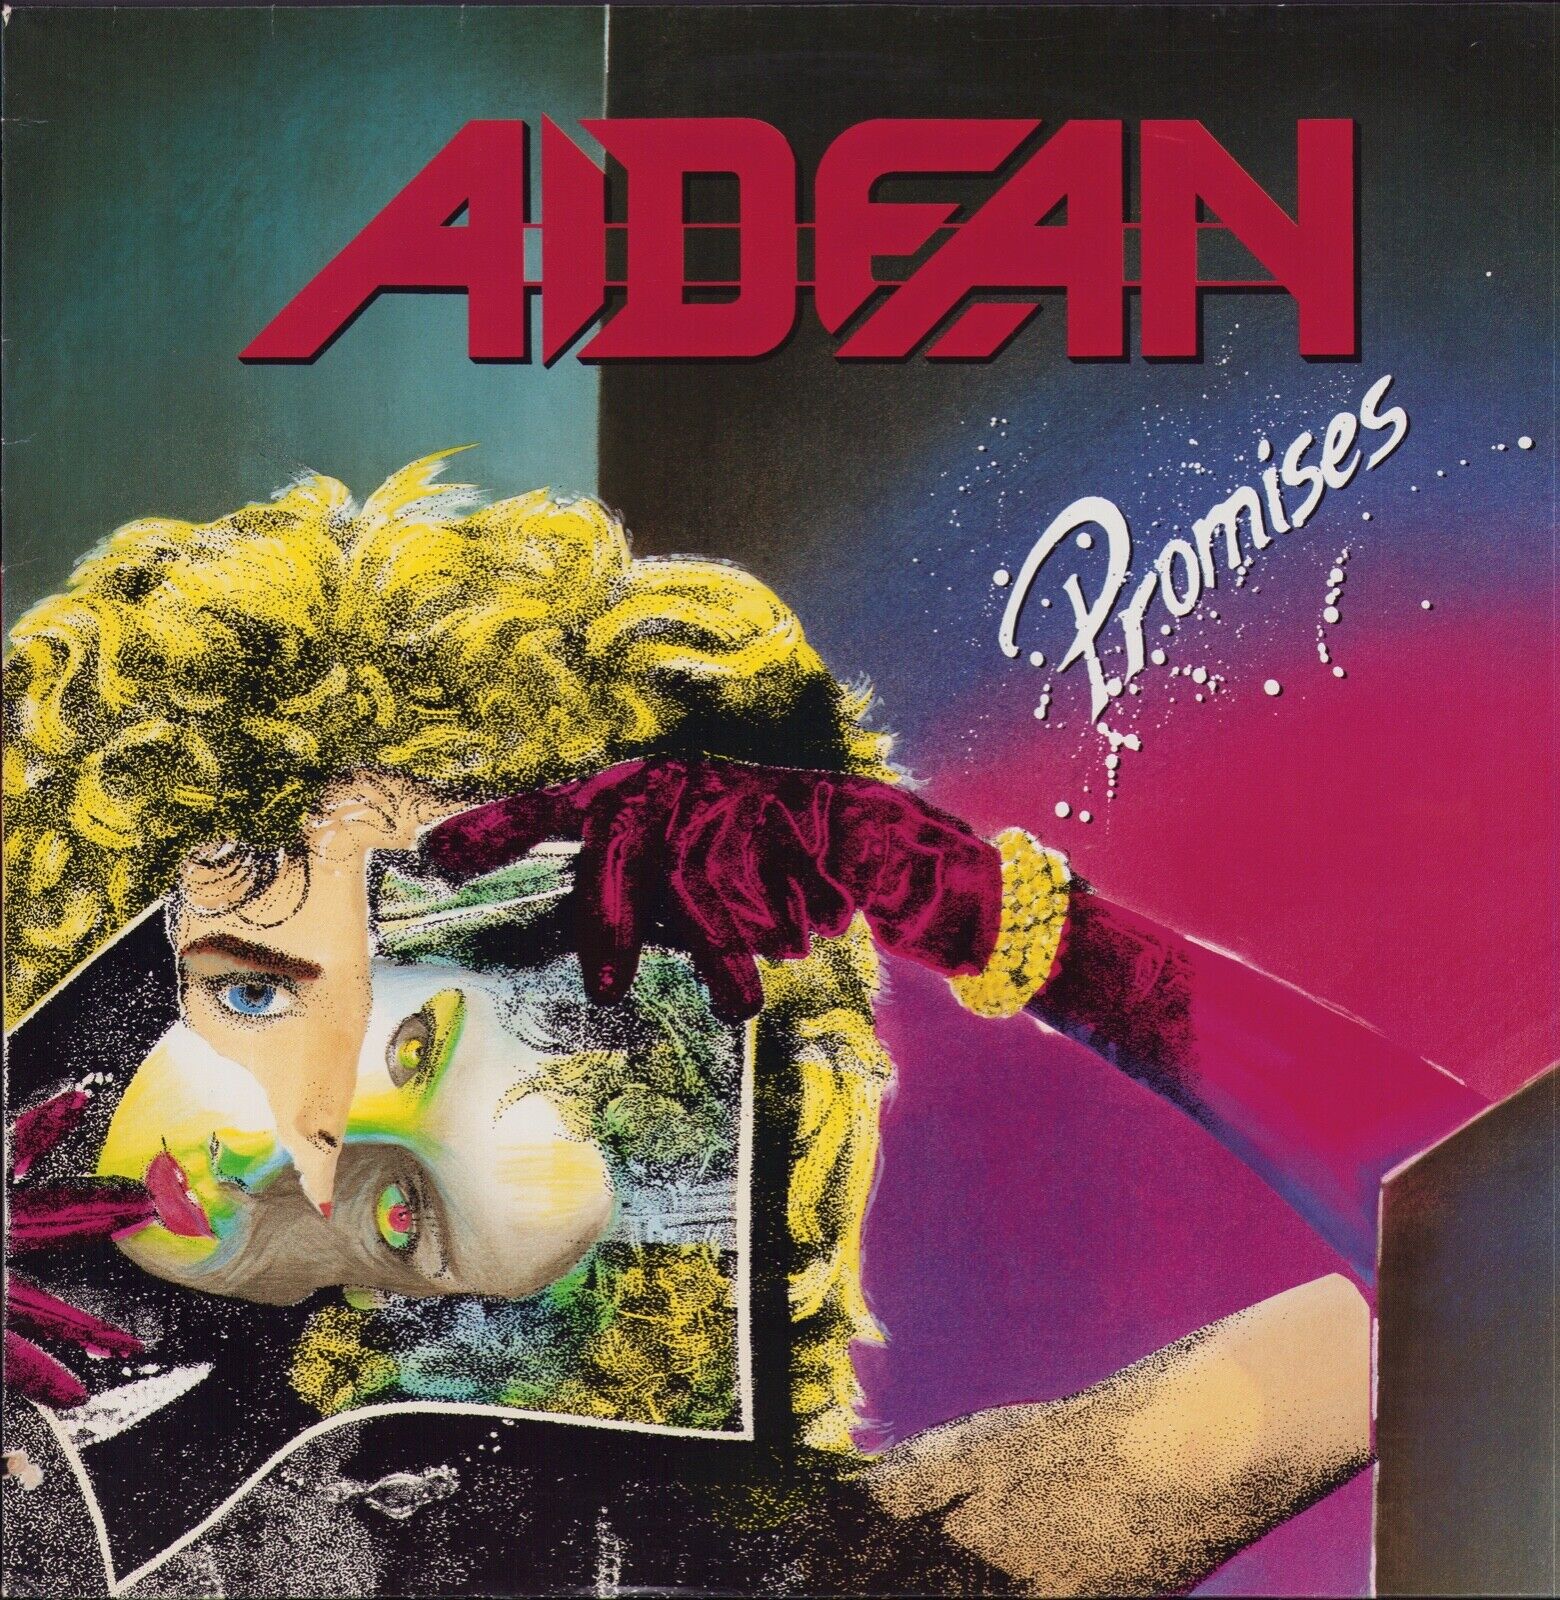 Aidean - Promises Vinyl LP